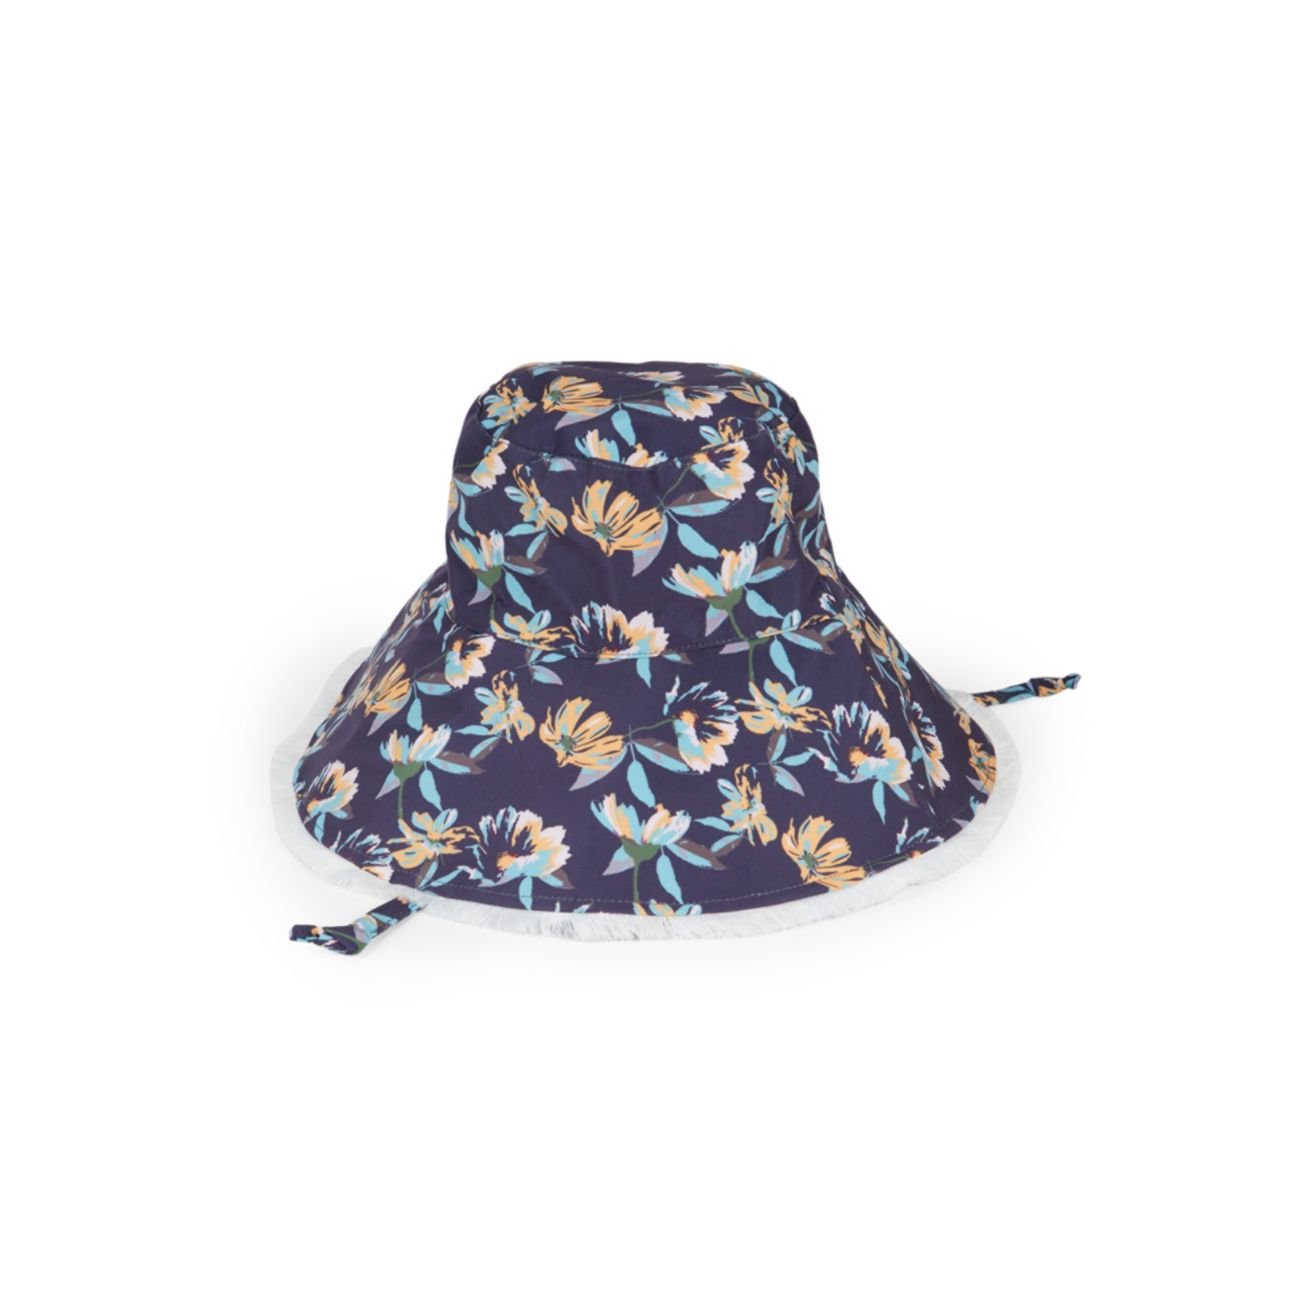 Шляпа-ведро для дискеты с принтом гепарда Laundry by Shelli Segal